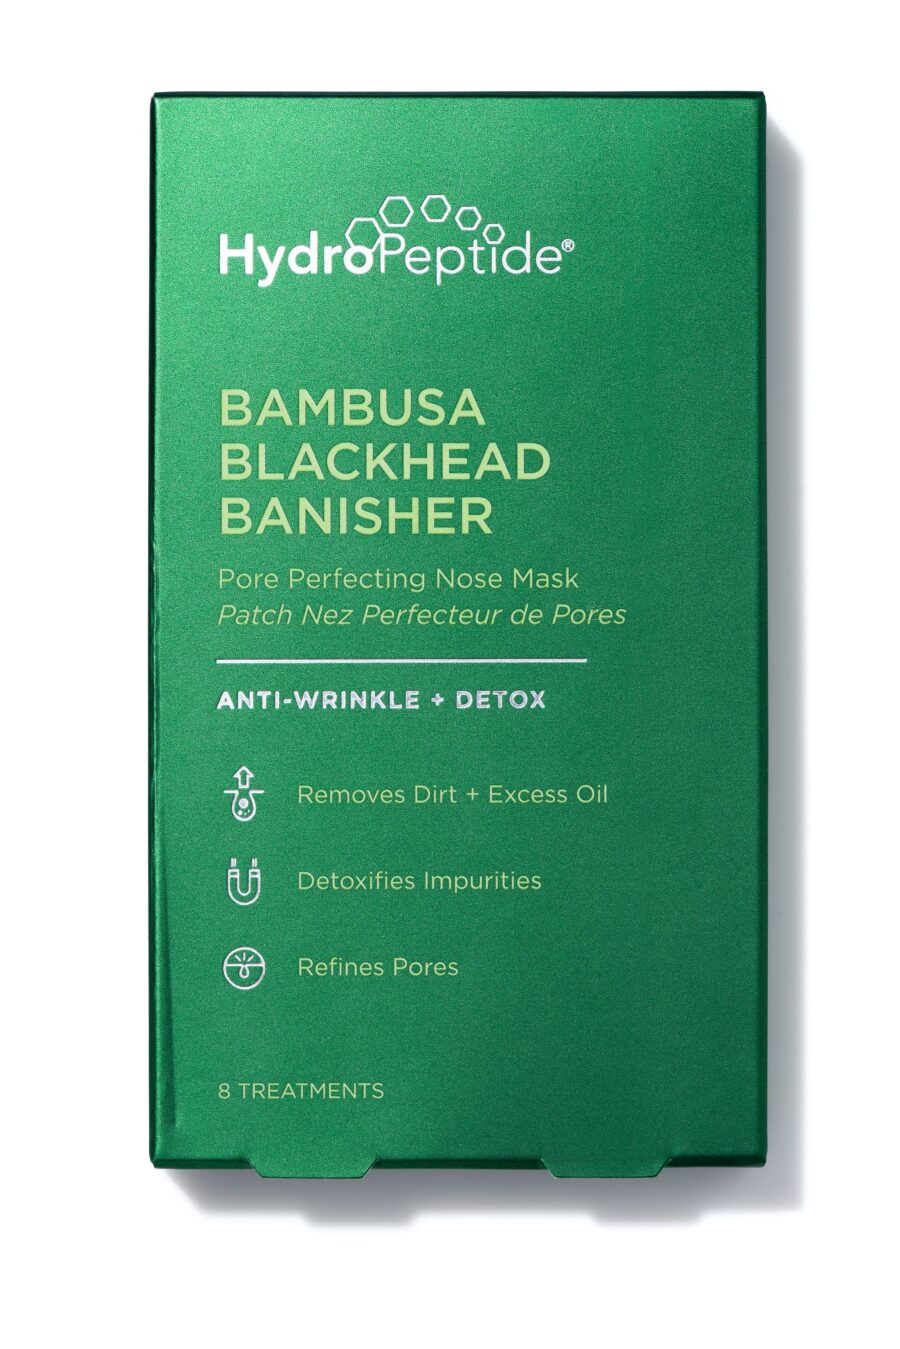 vuDS741o scaled Hydropeptide Bambusa Blackhead Banisher